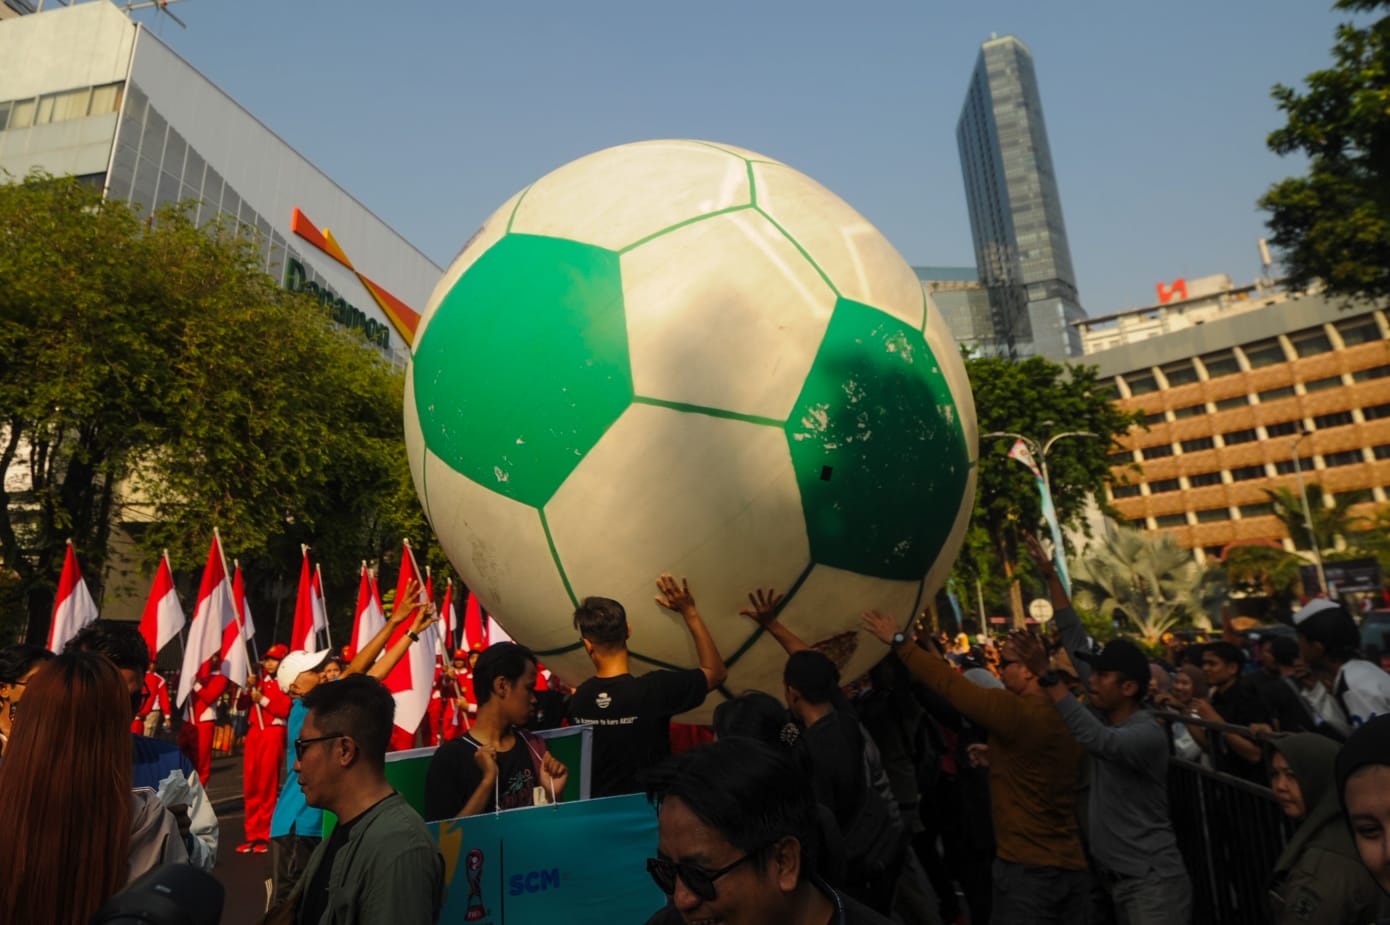 Sambut Piala Dunia U-17, Bola Raksasa Digelindingkan dari Siola ke Balai Pemuda